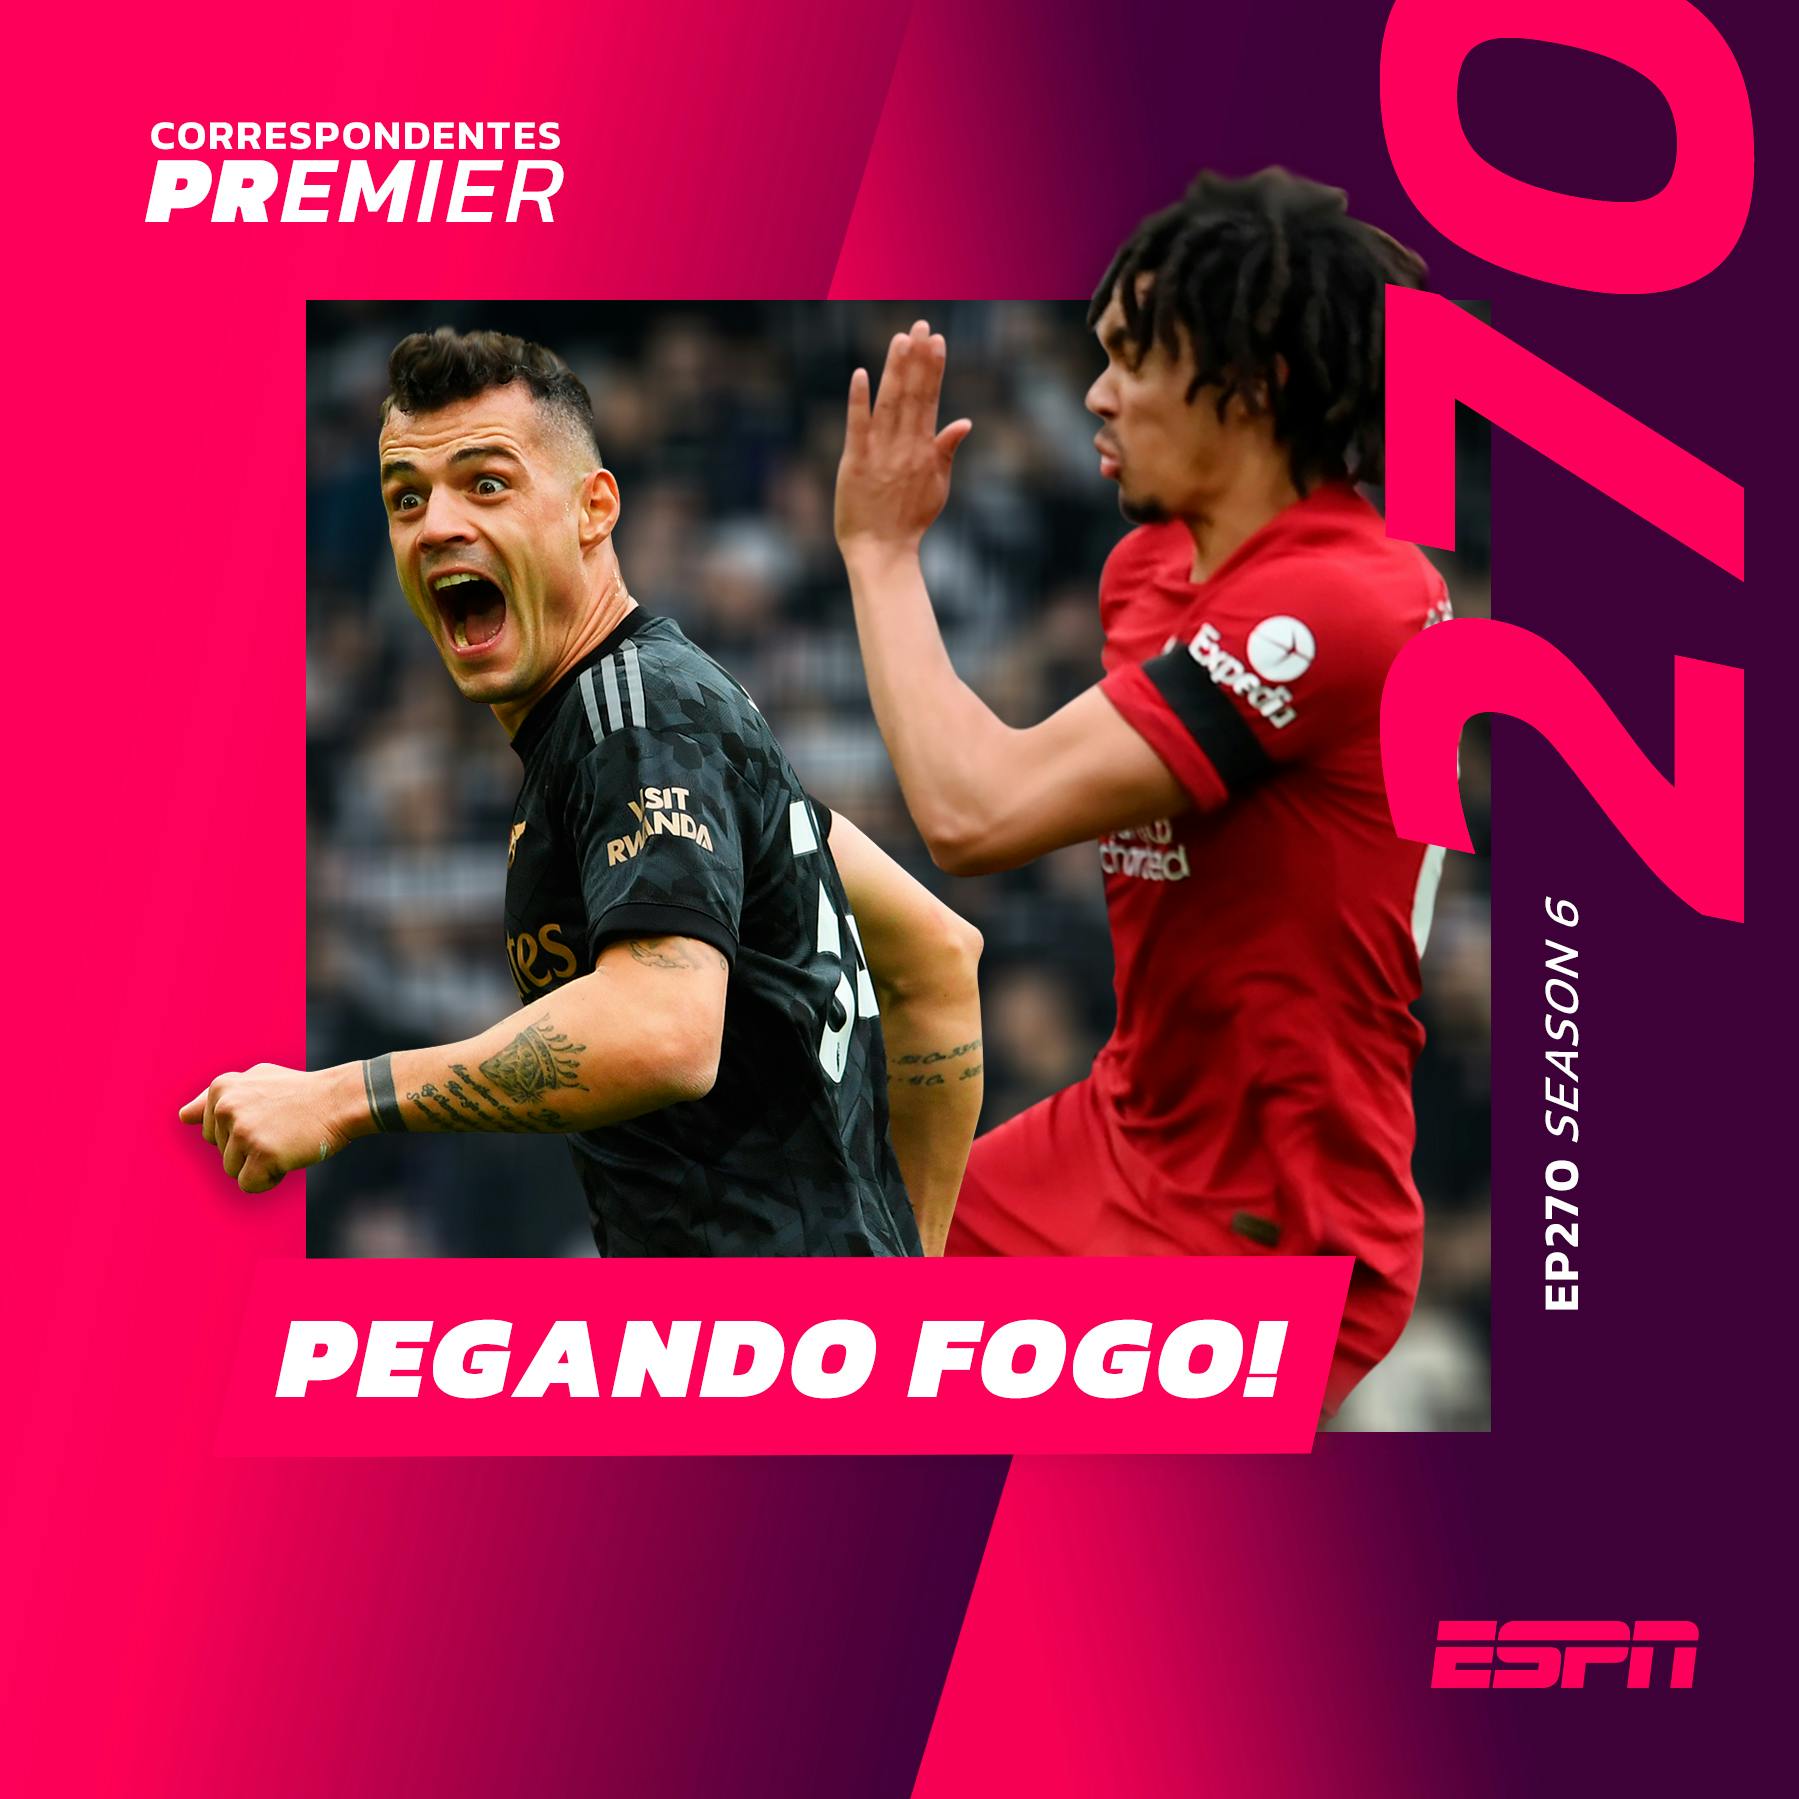 CORRESPONDENTES PREMIER #270: PEGANDO FOGO!